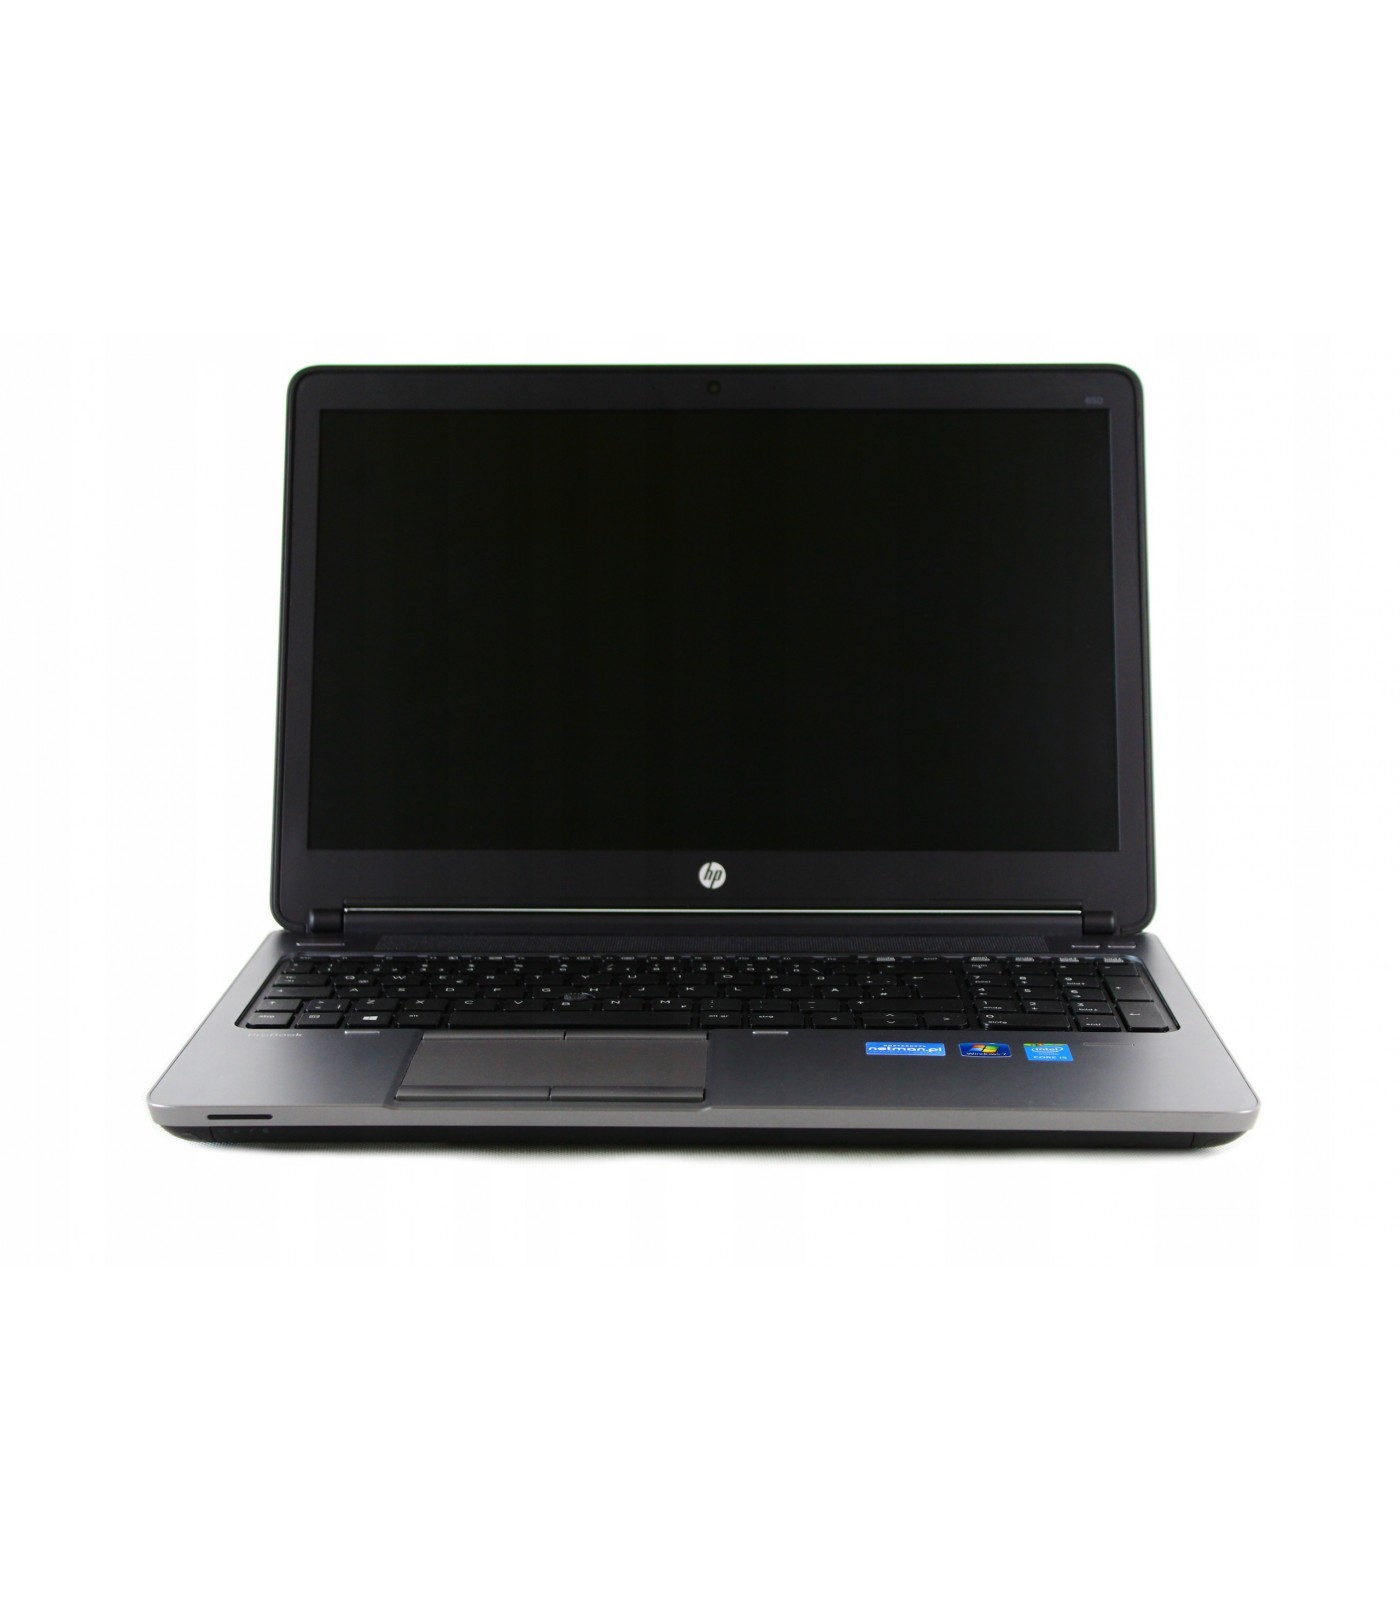 Poleasingowy laptop HP ProBook 650 G1 z Intel Core i3-4000M w Klasie A.